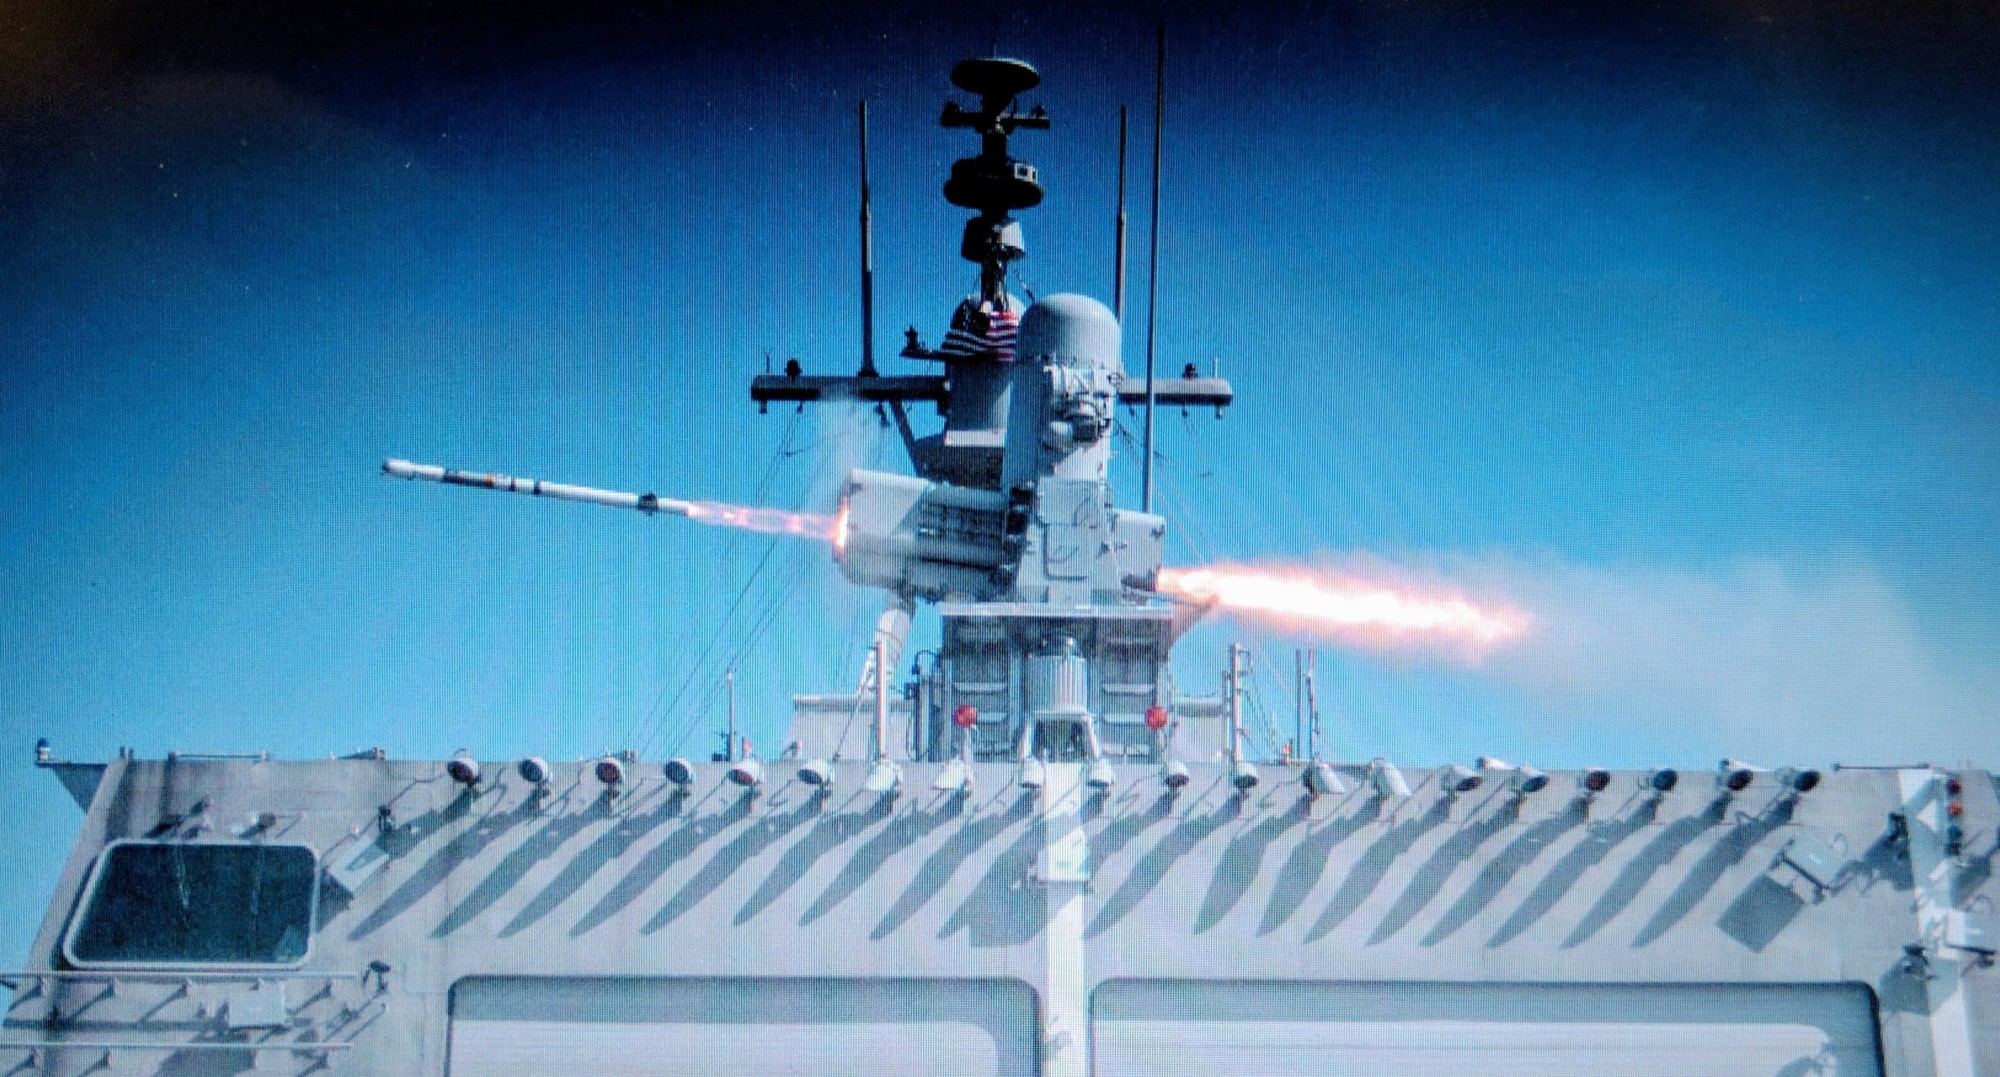 lcs-6 uss jackson independence class littoral combat ship us navy 15 mk. 15 mod. 31 ciws rim-116 ram missile